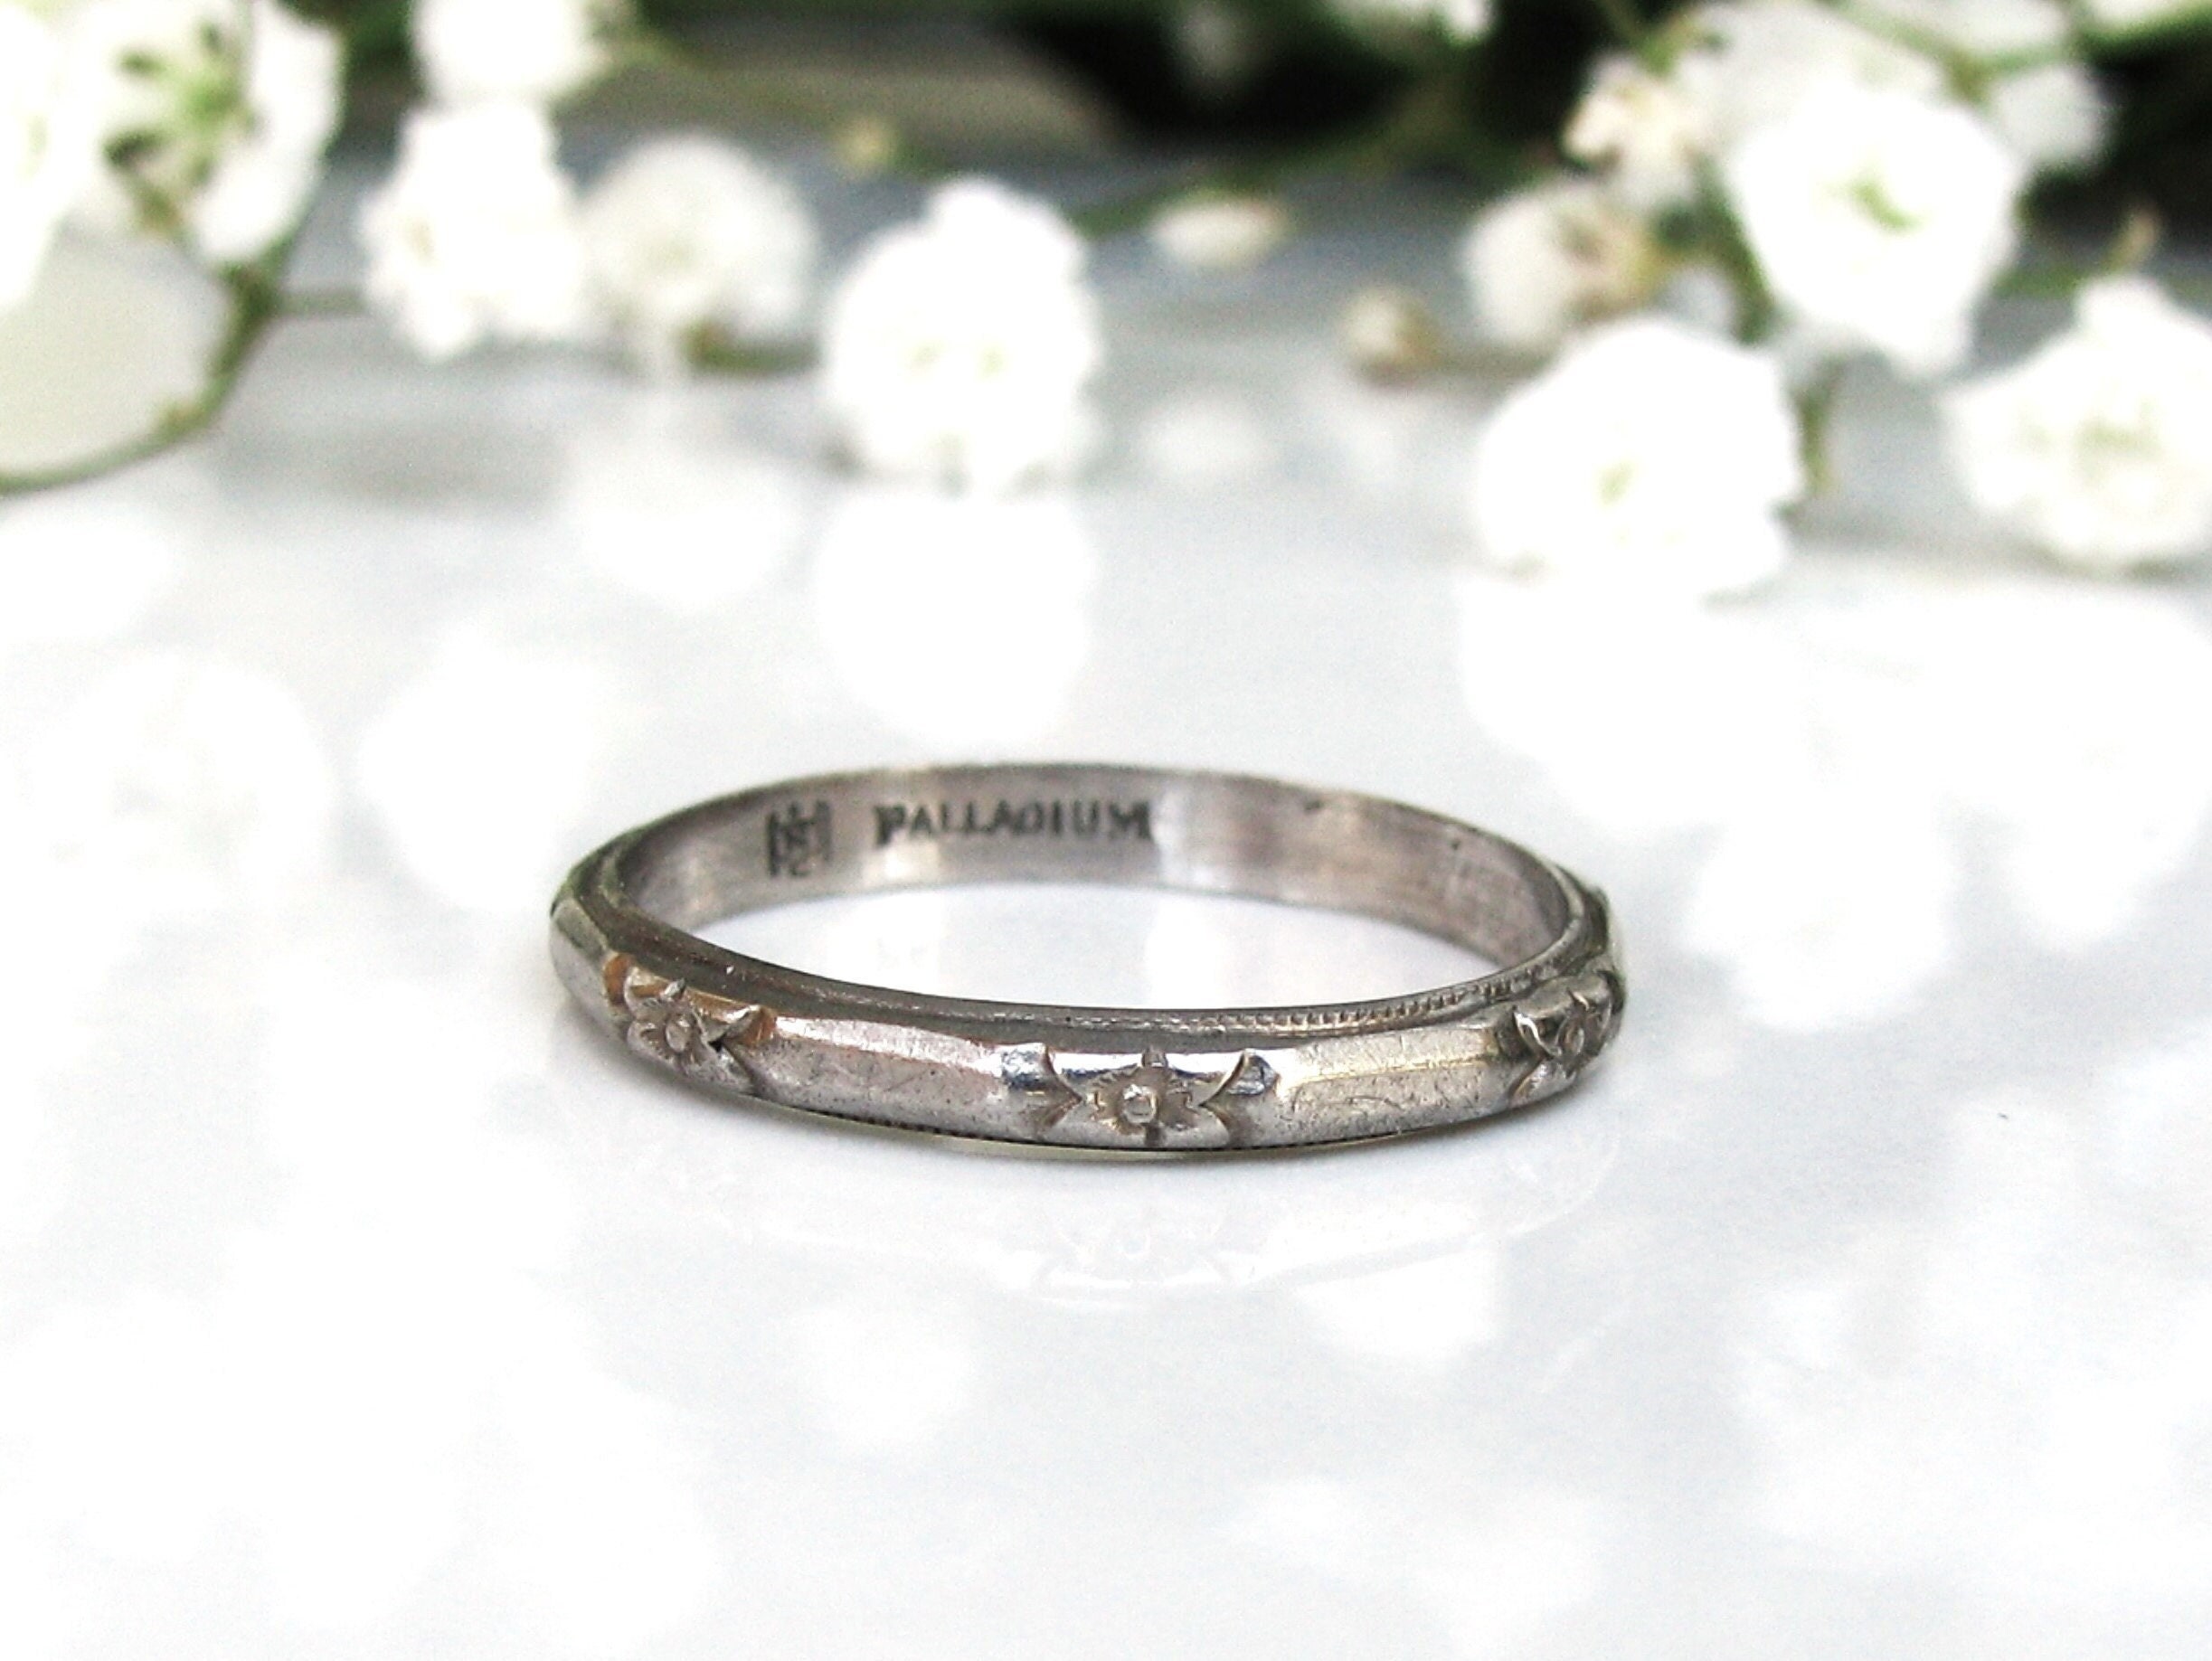 Gentleman's Palladium Wedding Ring - Artfull Expression